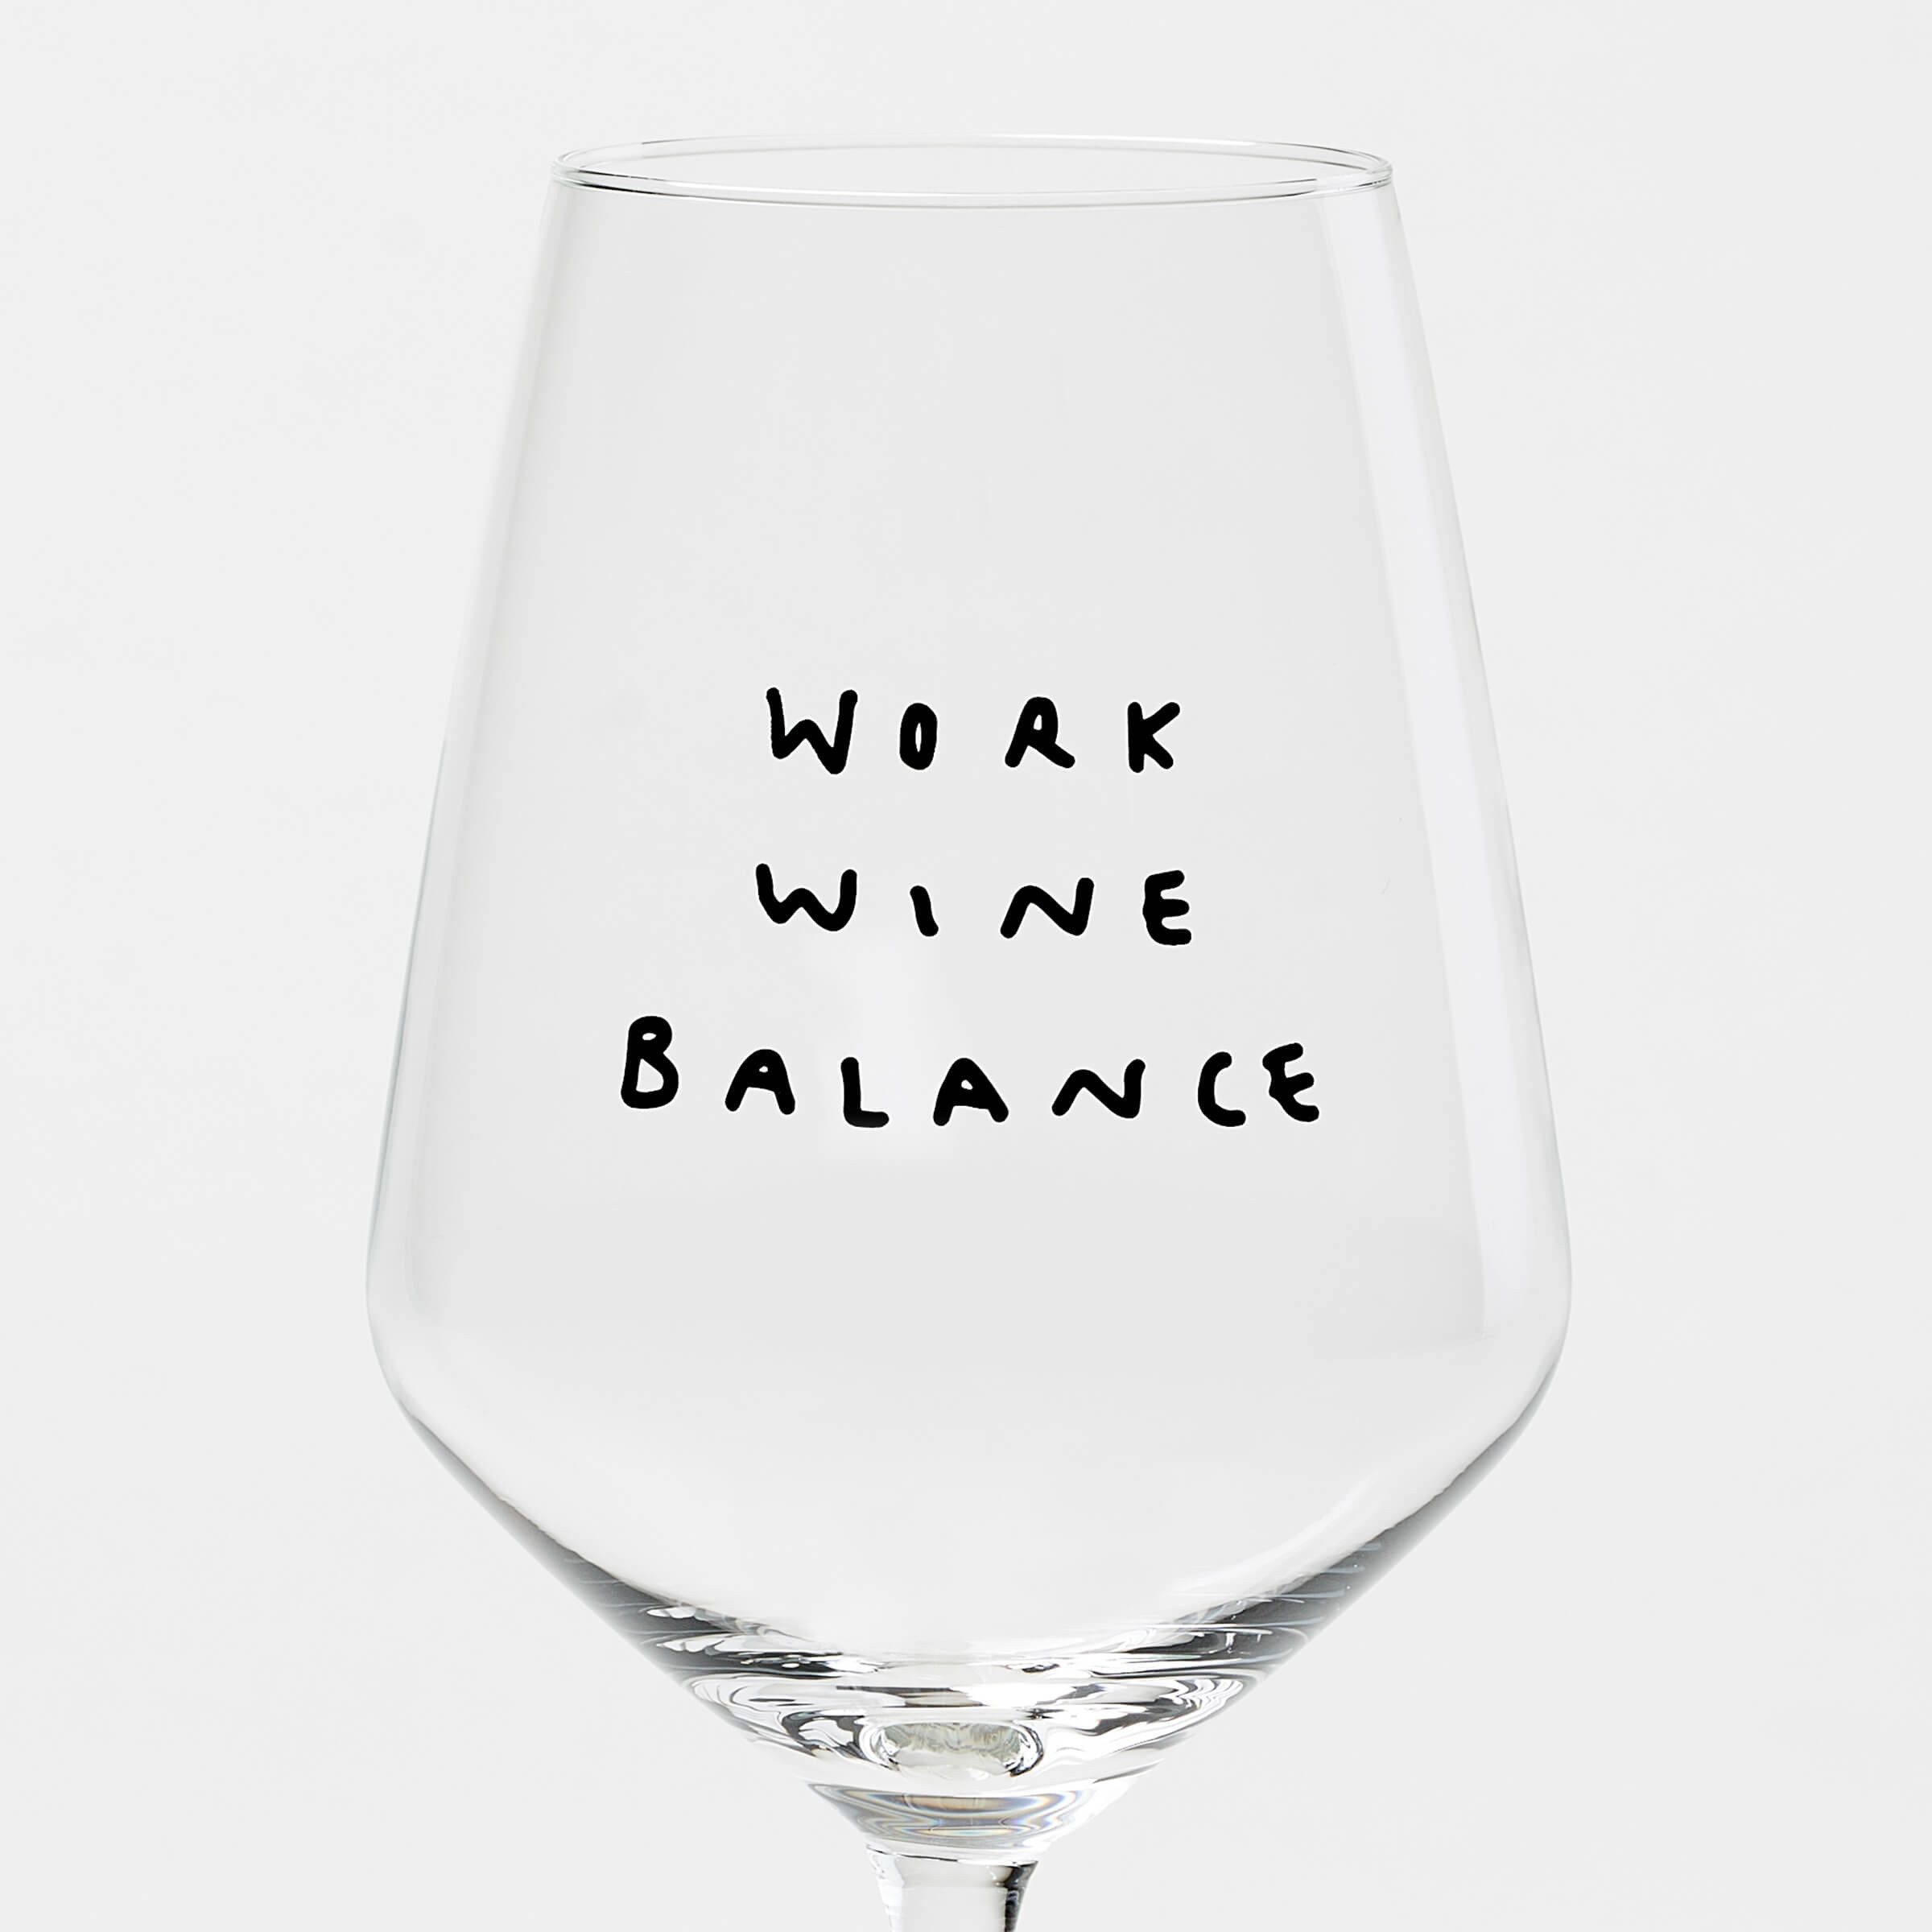 selekkt Weinglas "Work Wine Balance" Weinglas by Johanna Schwarzer × selekkt